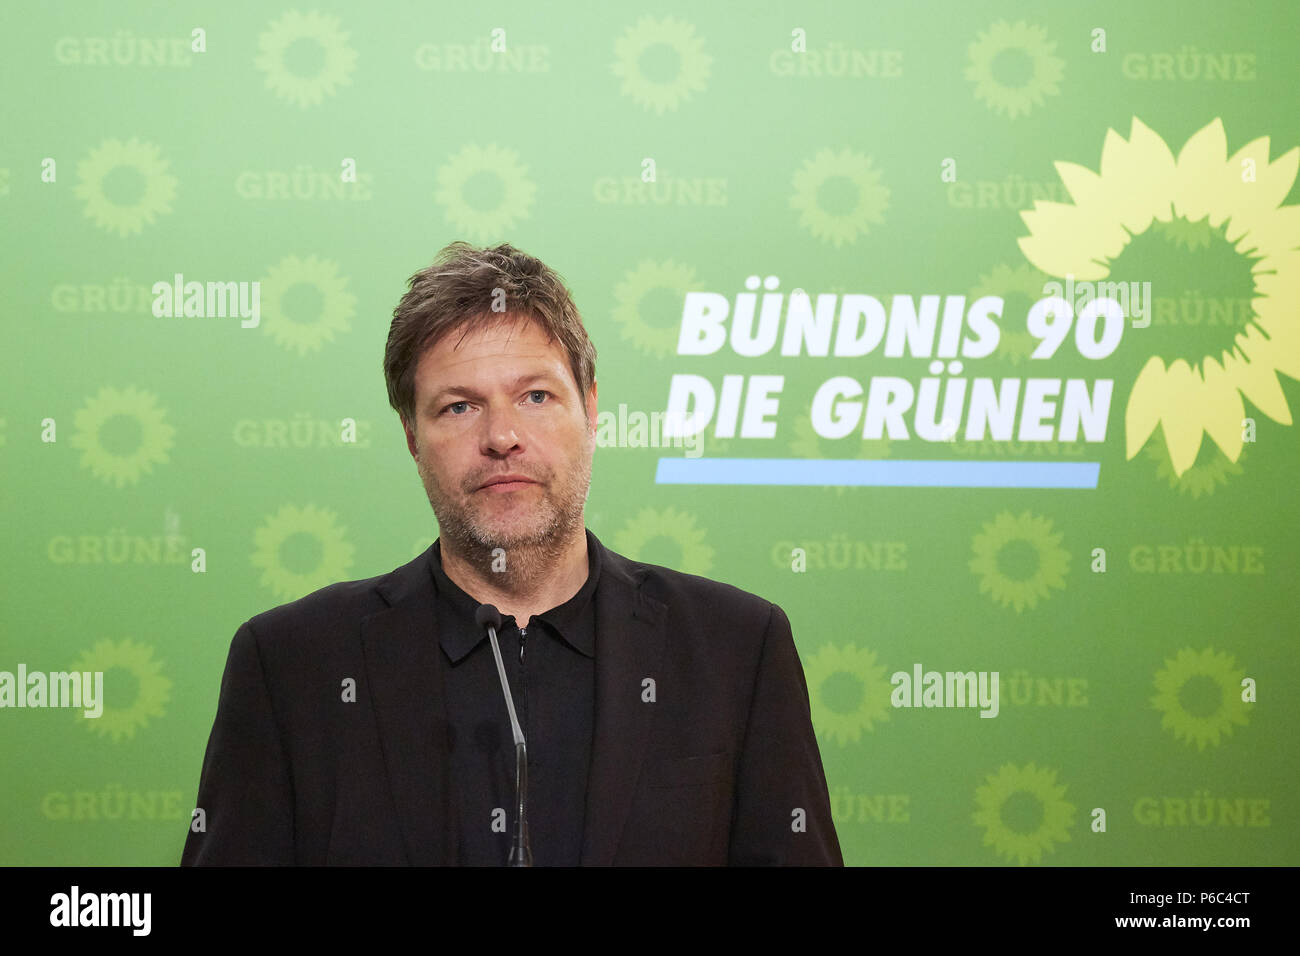 Berlin, Allemagne - Robert Habeck, Président de l'Alliance 90 / Die Gruenen. Banque D'Images